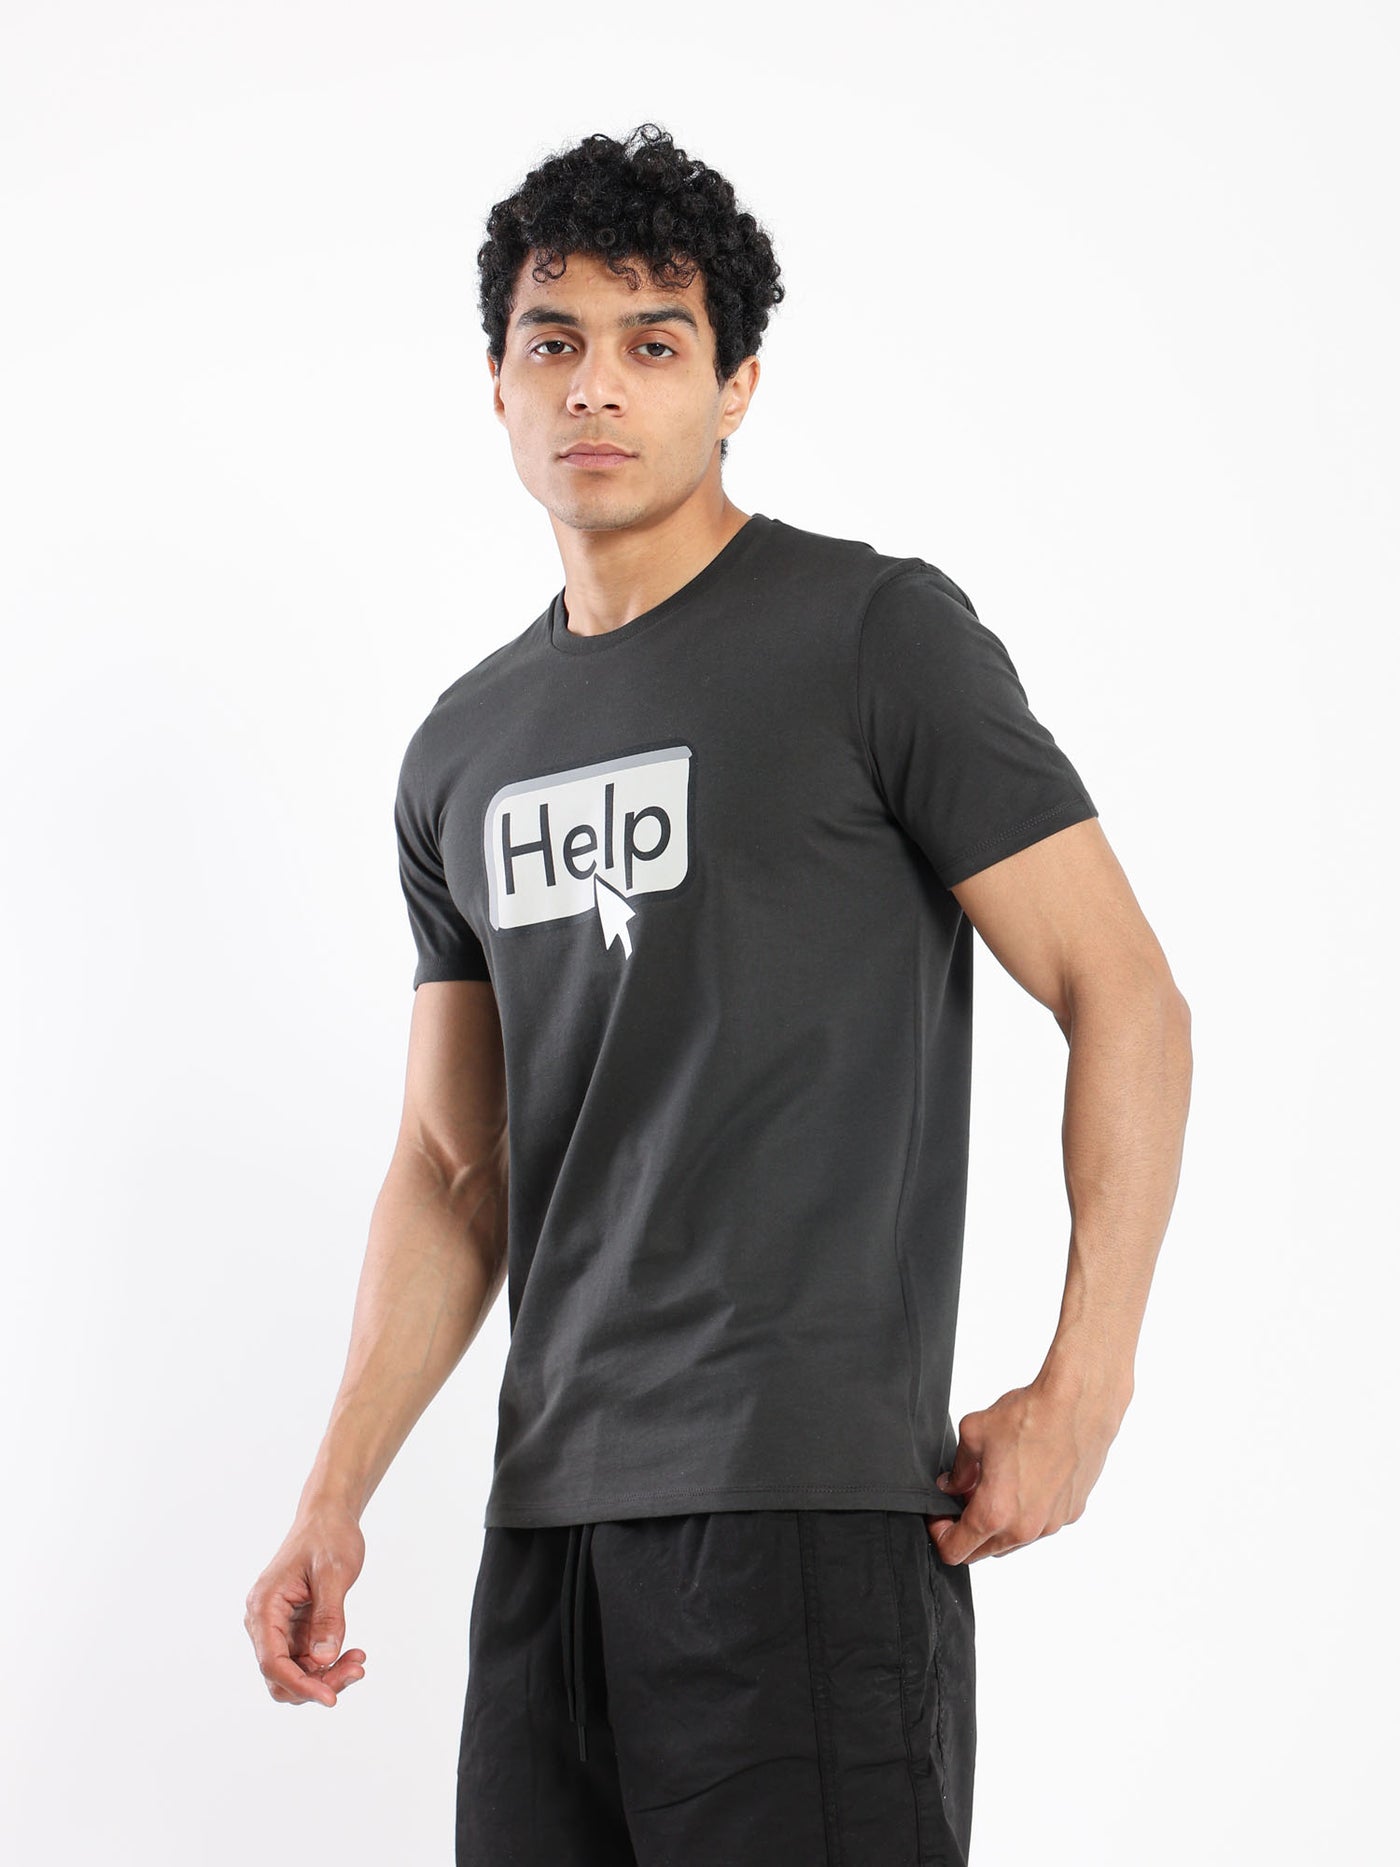 T-Shirt - "Help" Front Text Print